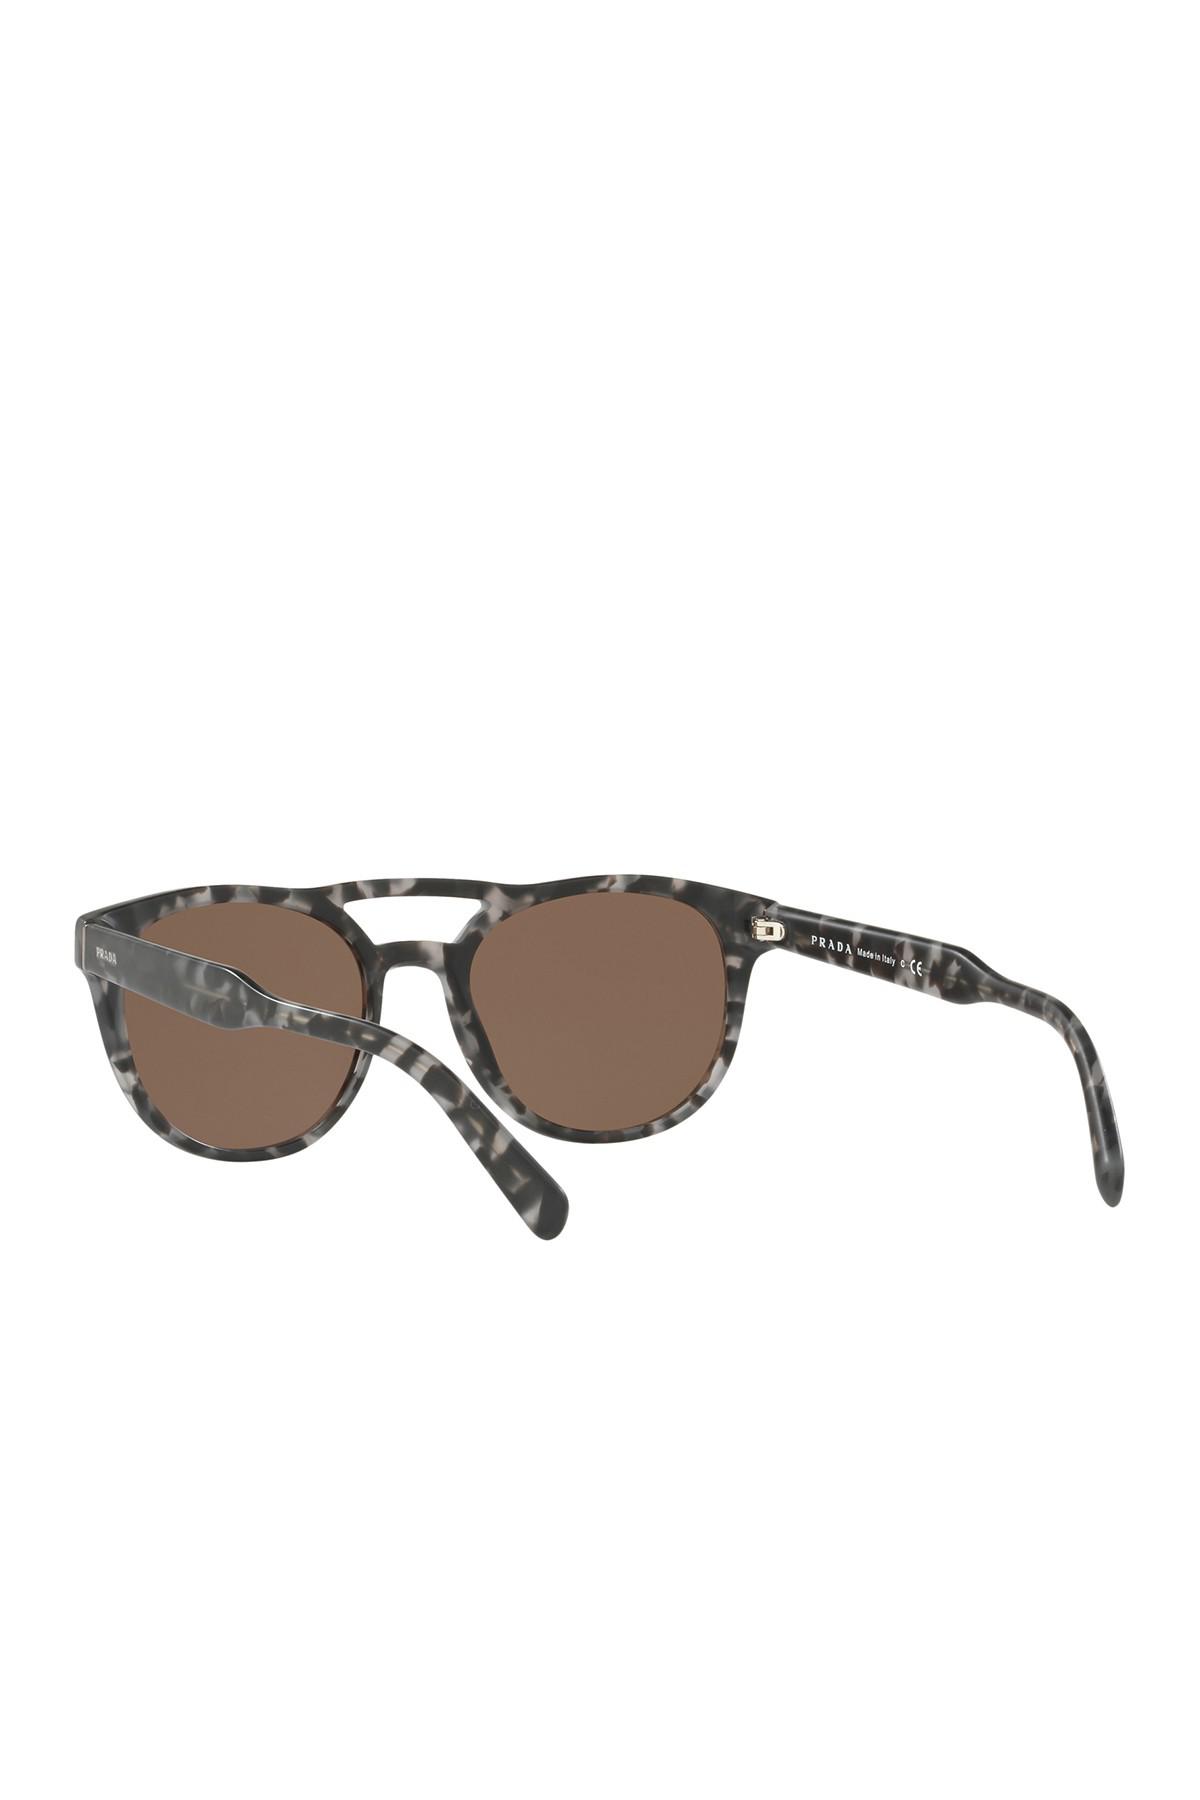 prada 54mm round aviator sunglasses